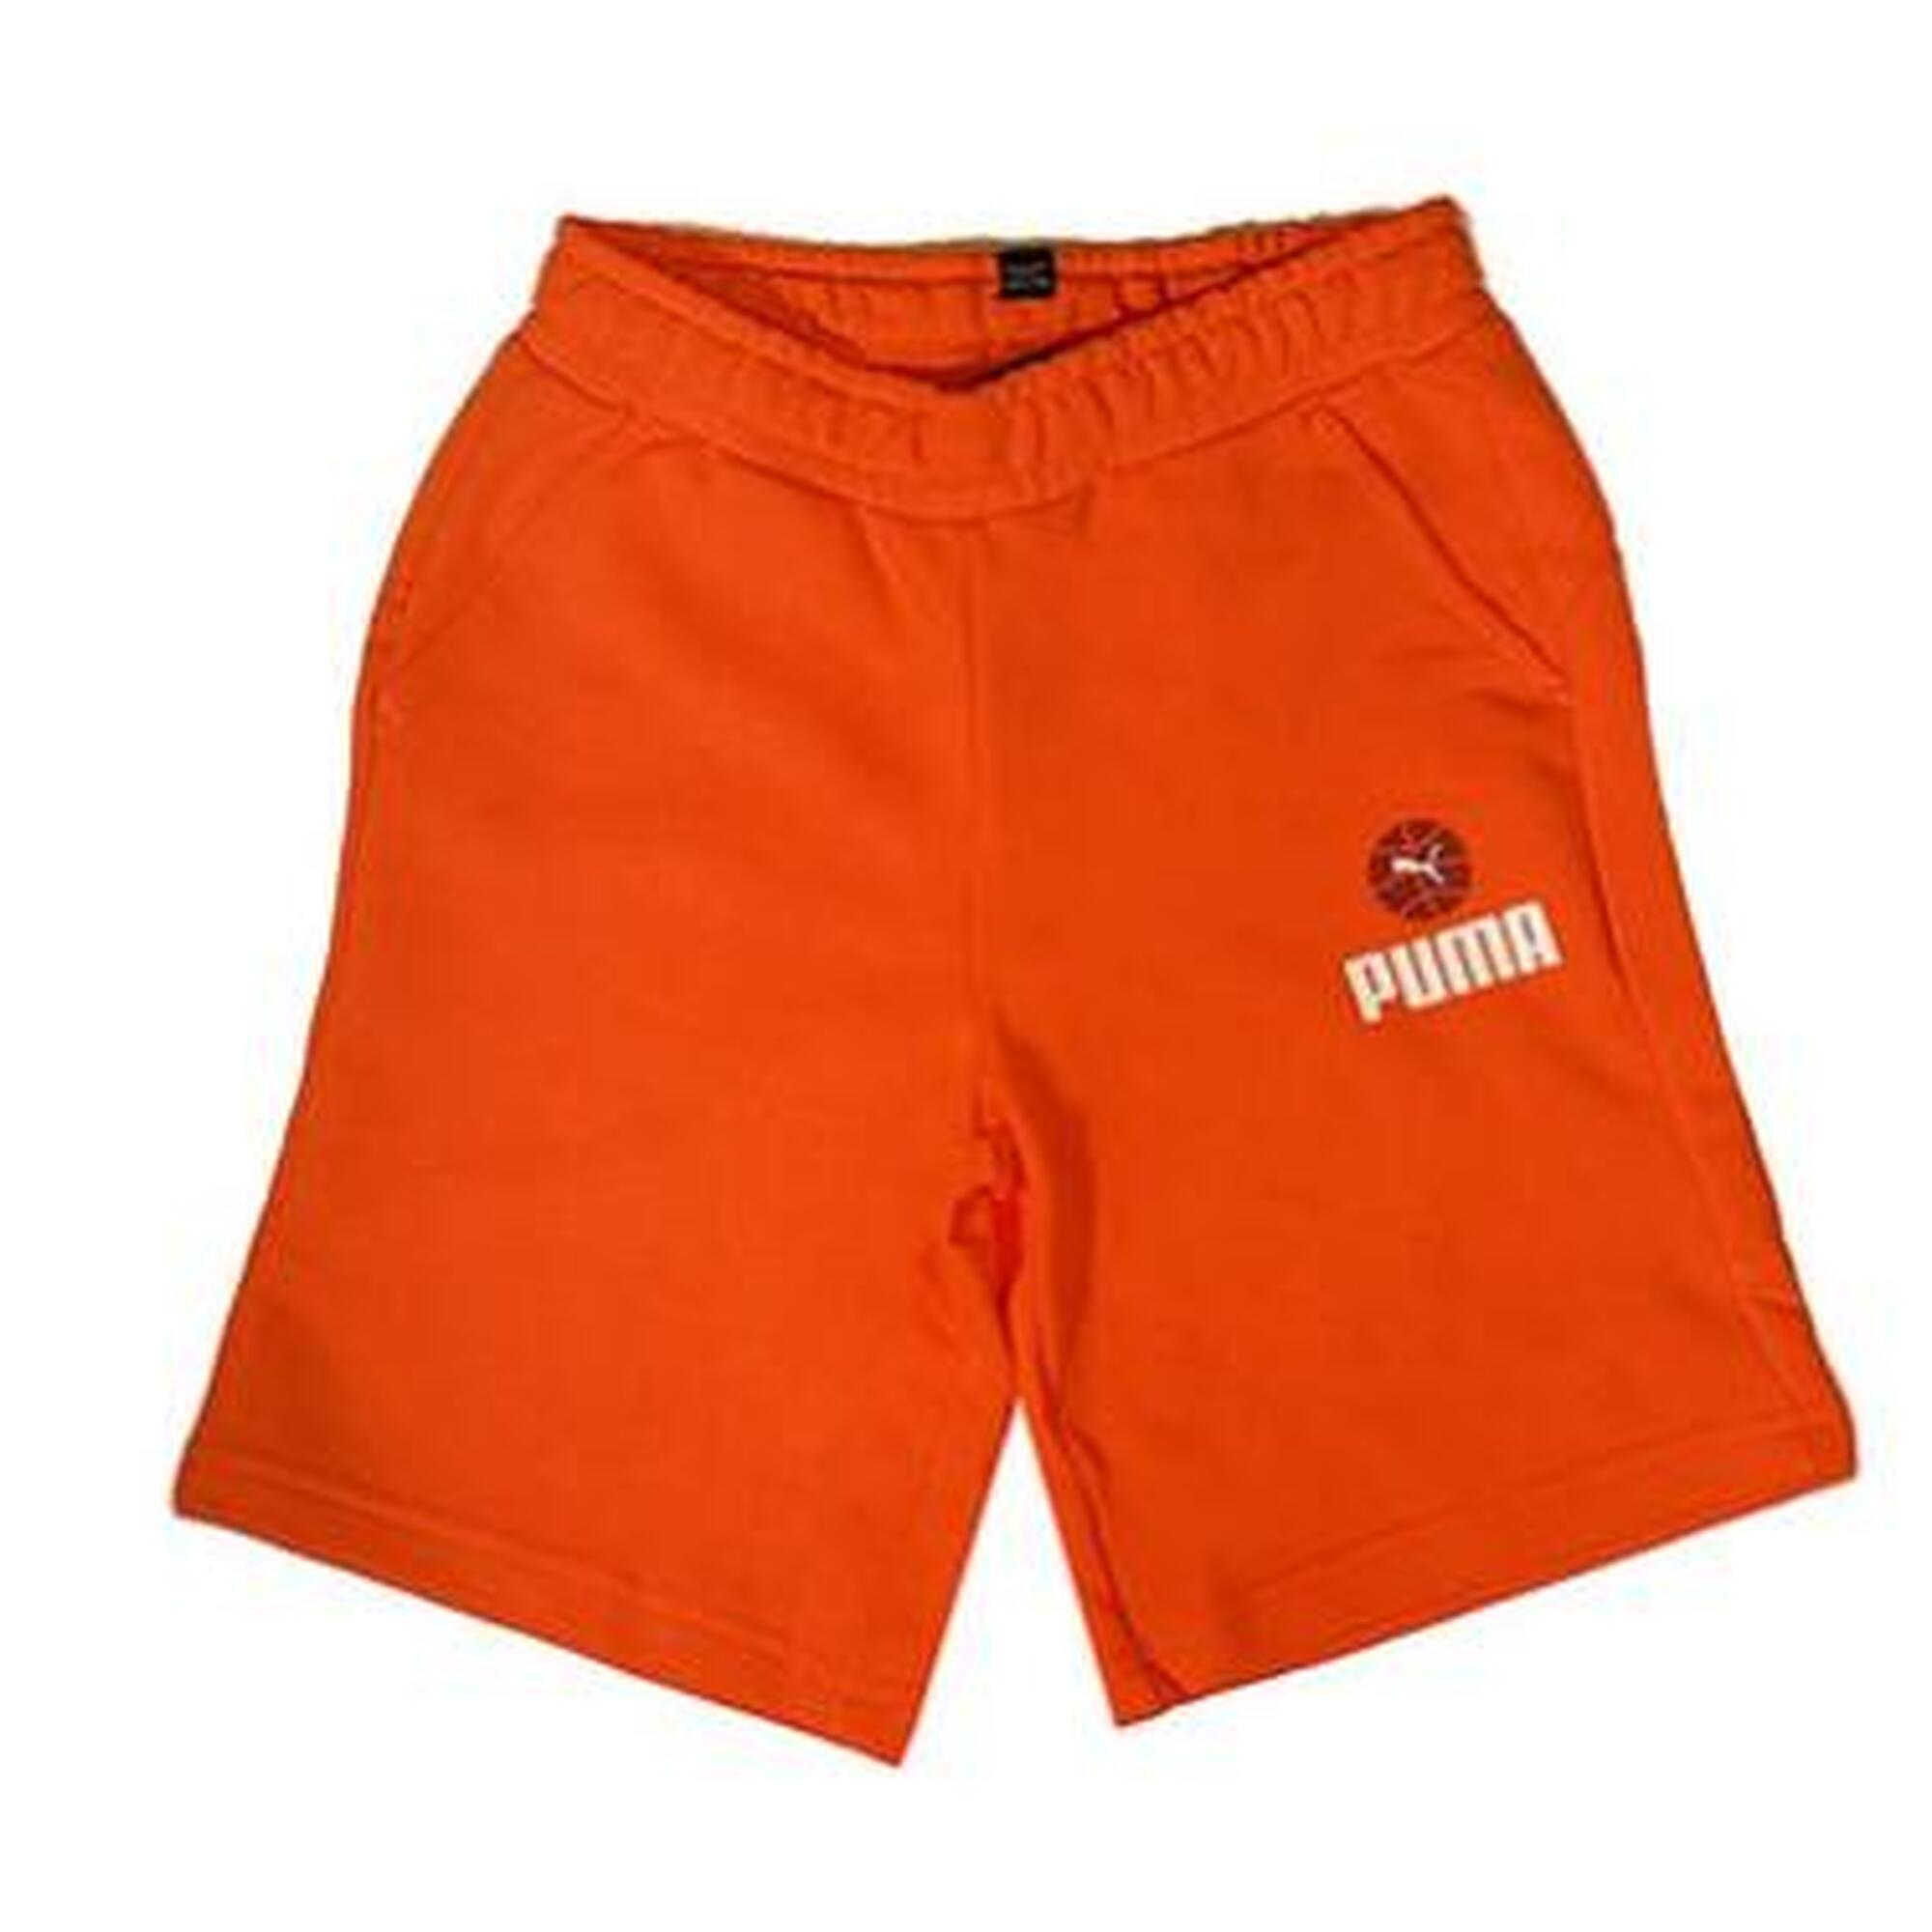 Pantaloncino ragazzo puma - arancio